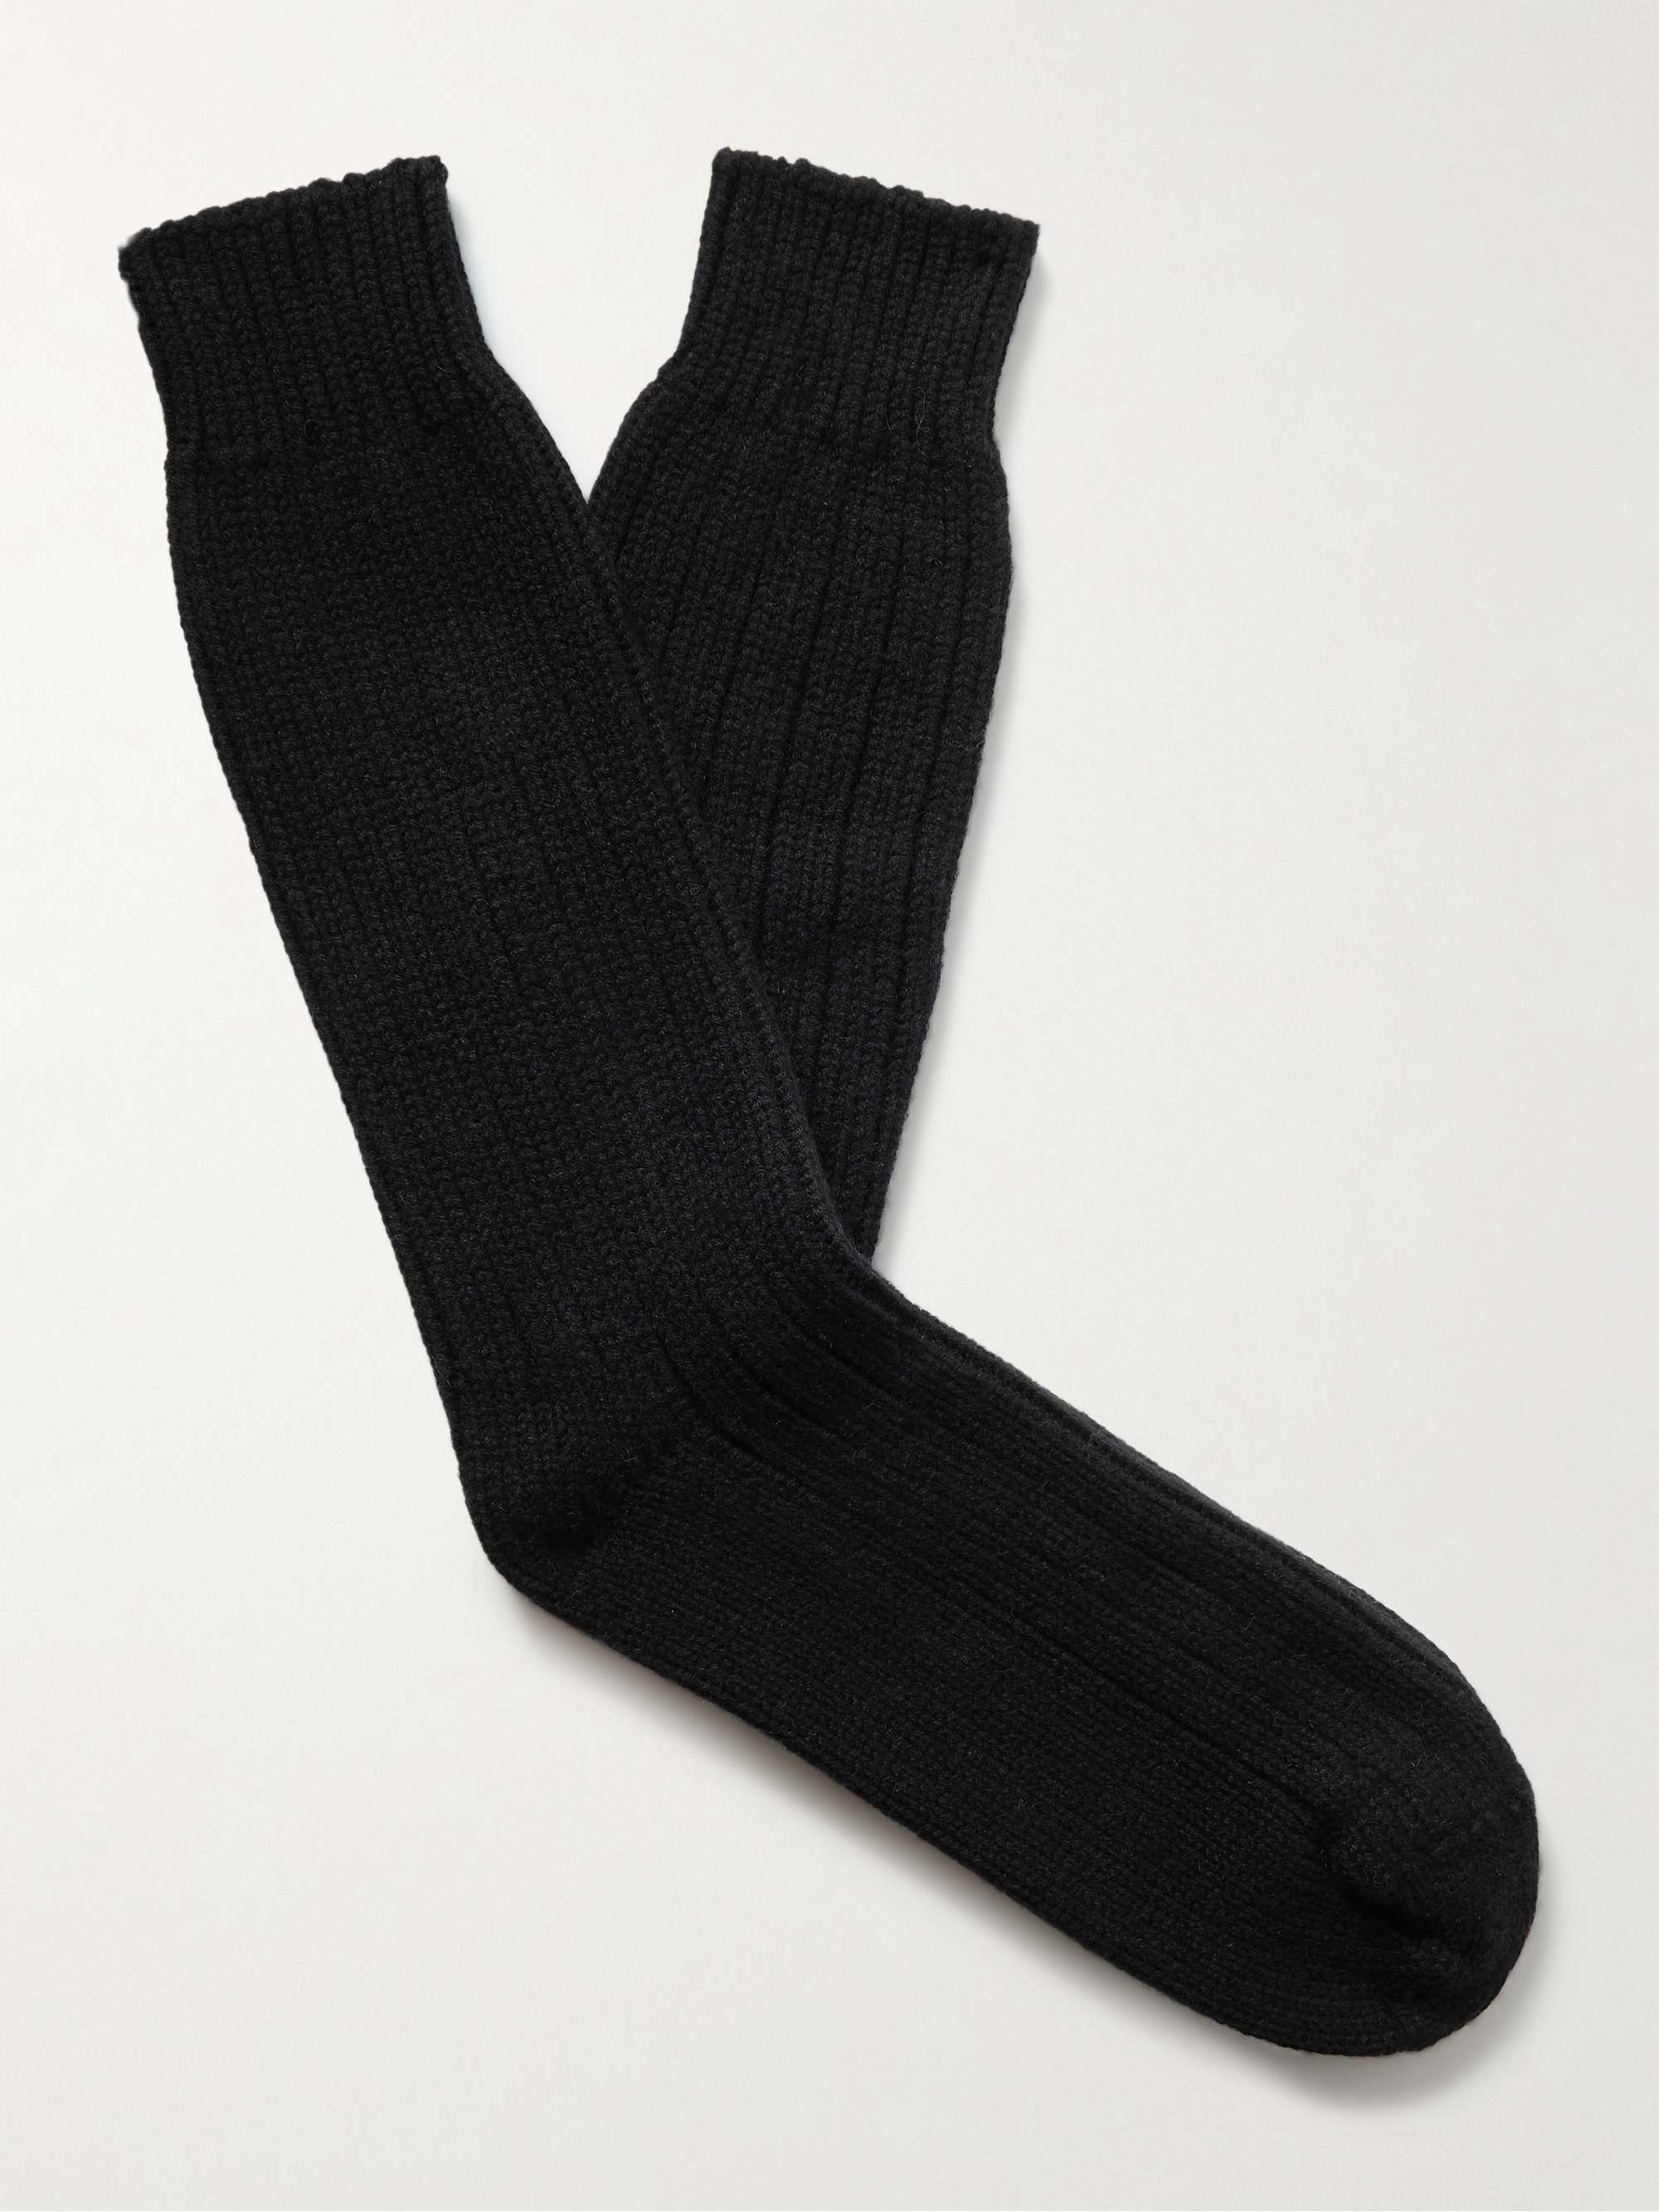 TOM FORD Ribbed Cashmere Socks | MR PORTER